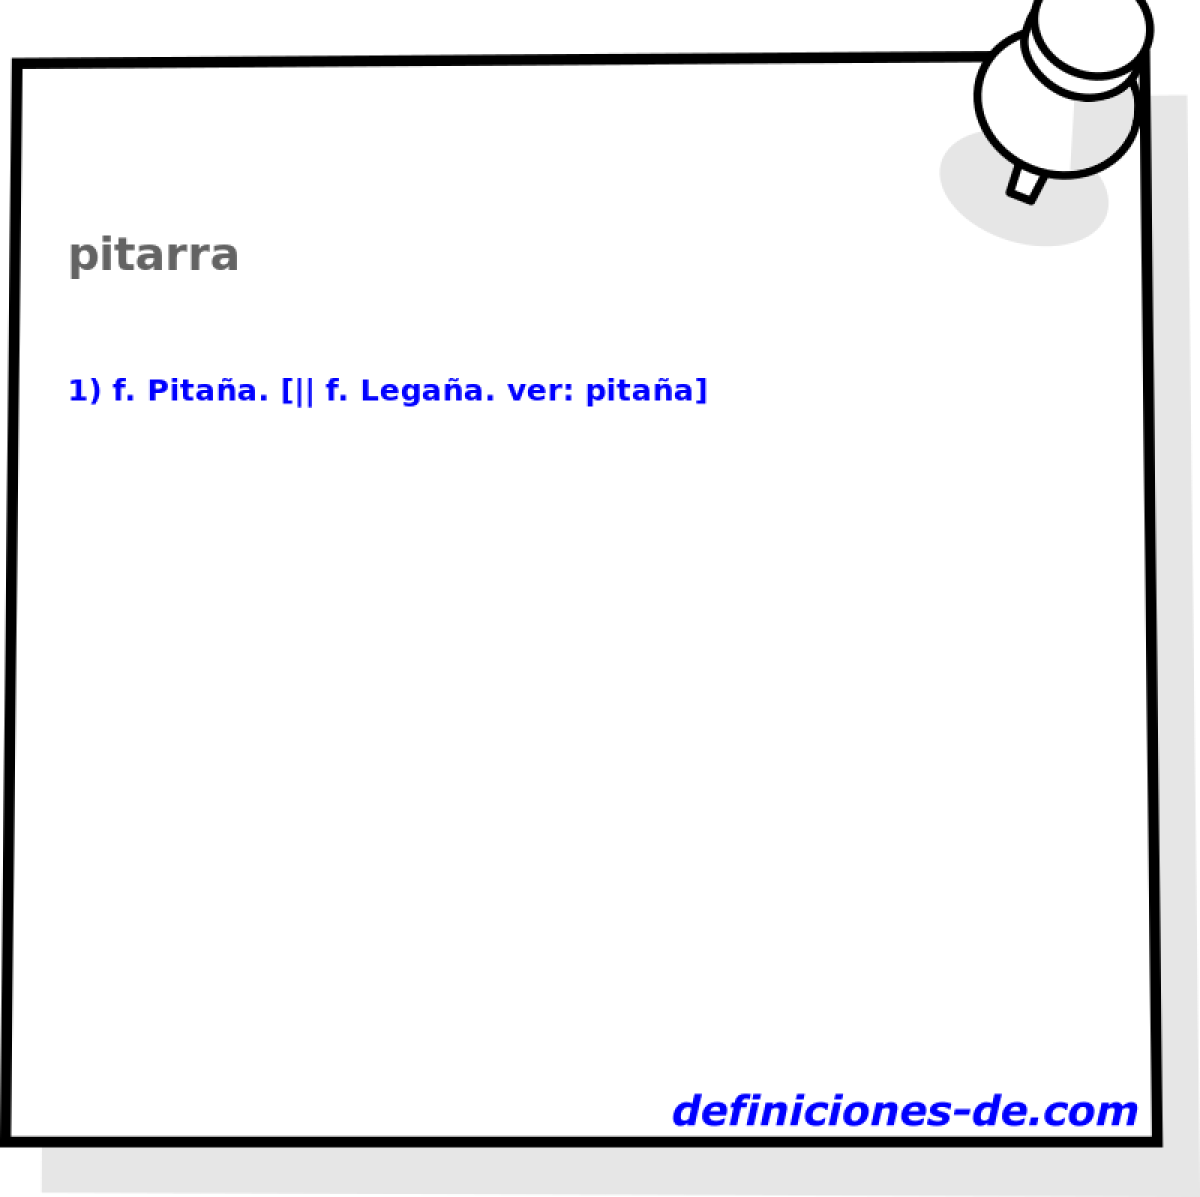 pitarra 